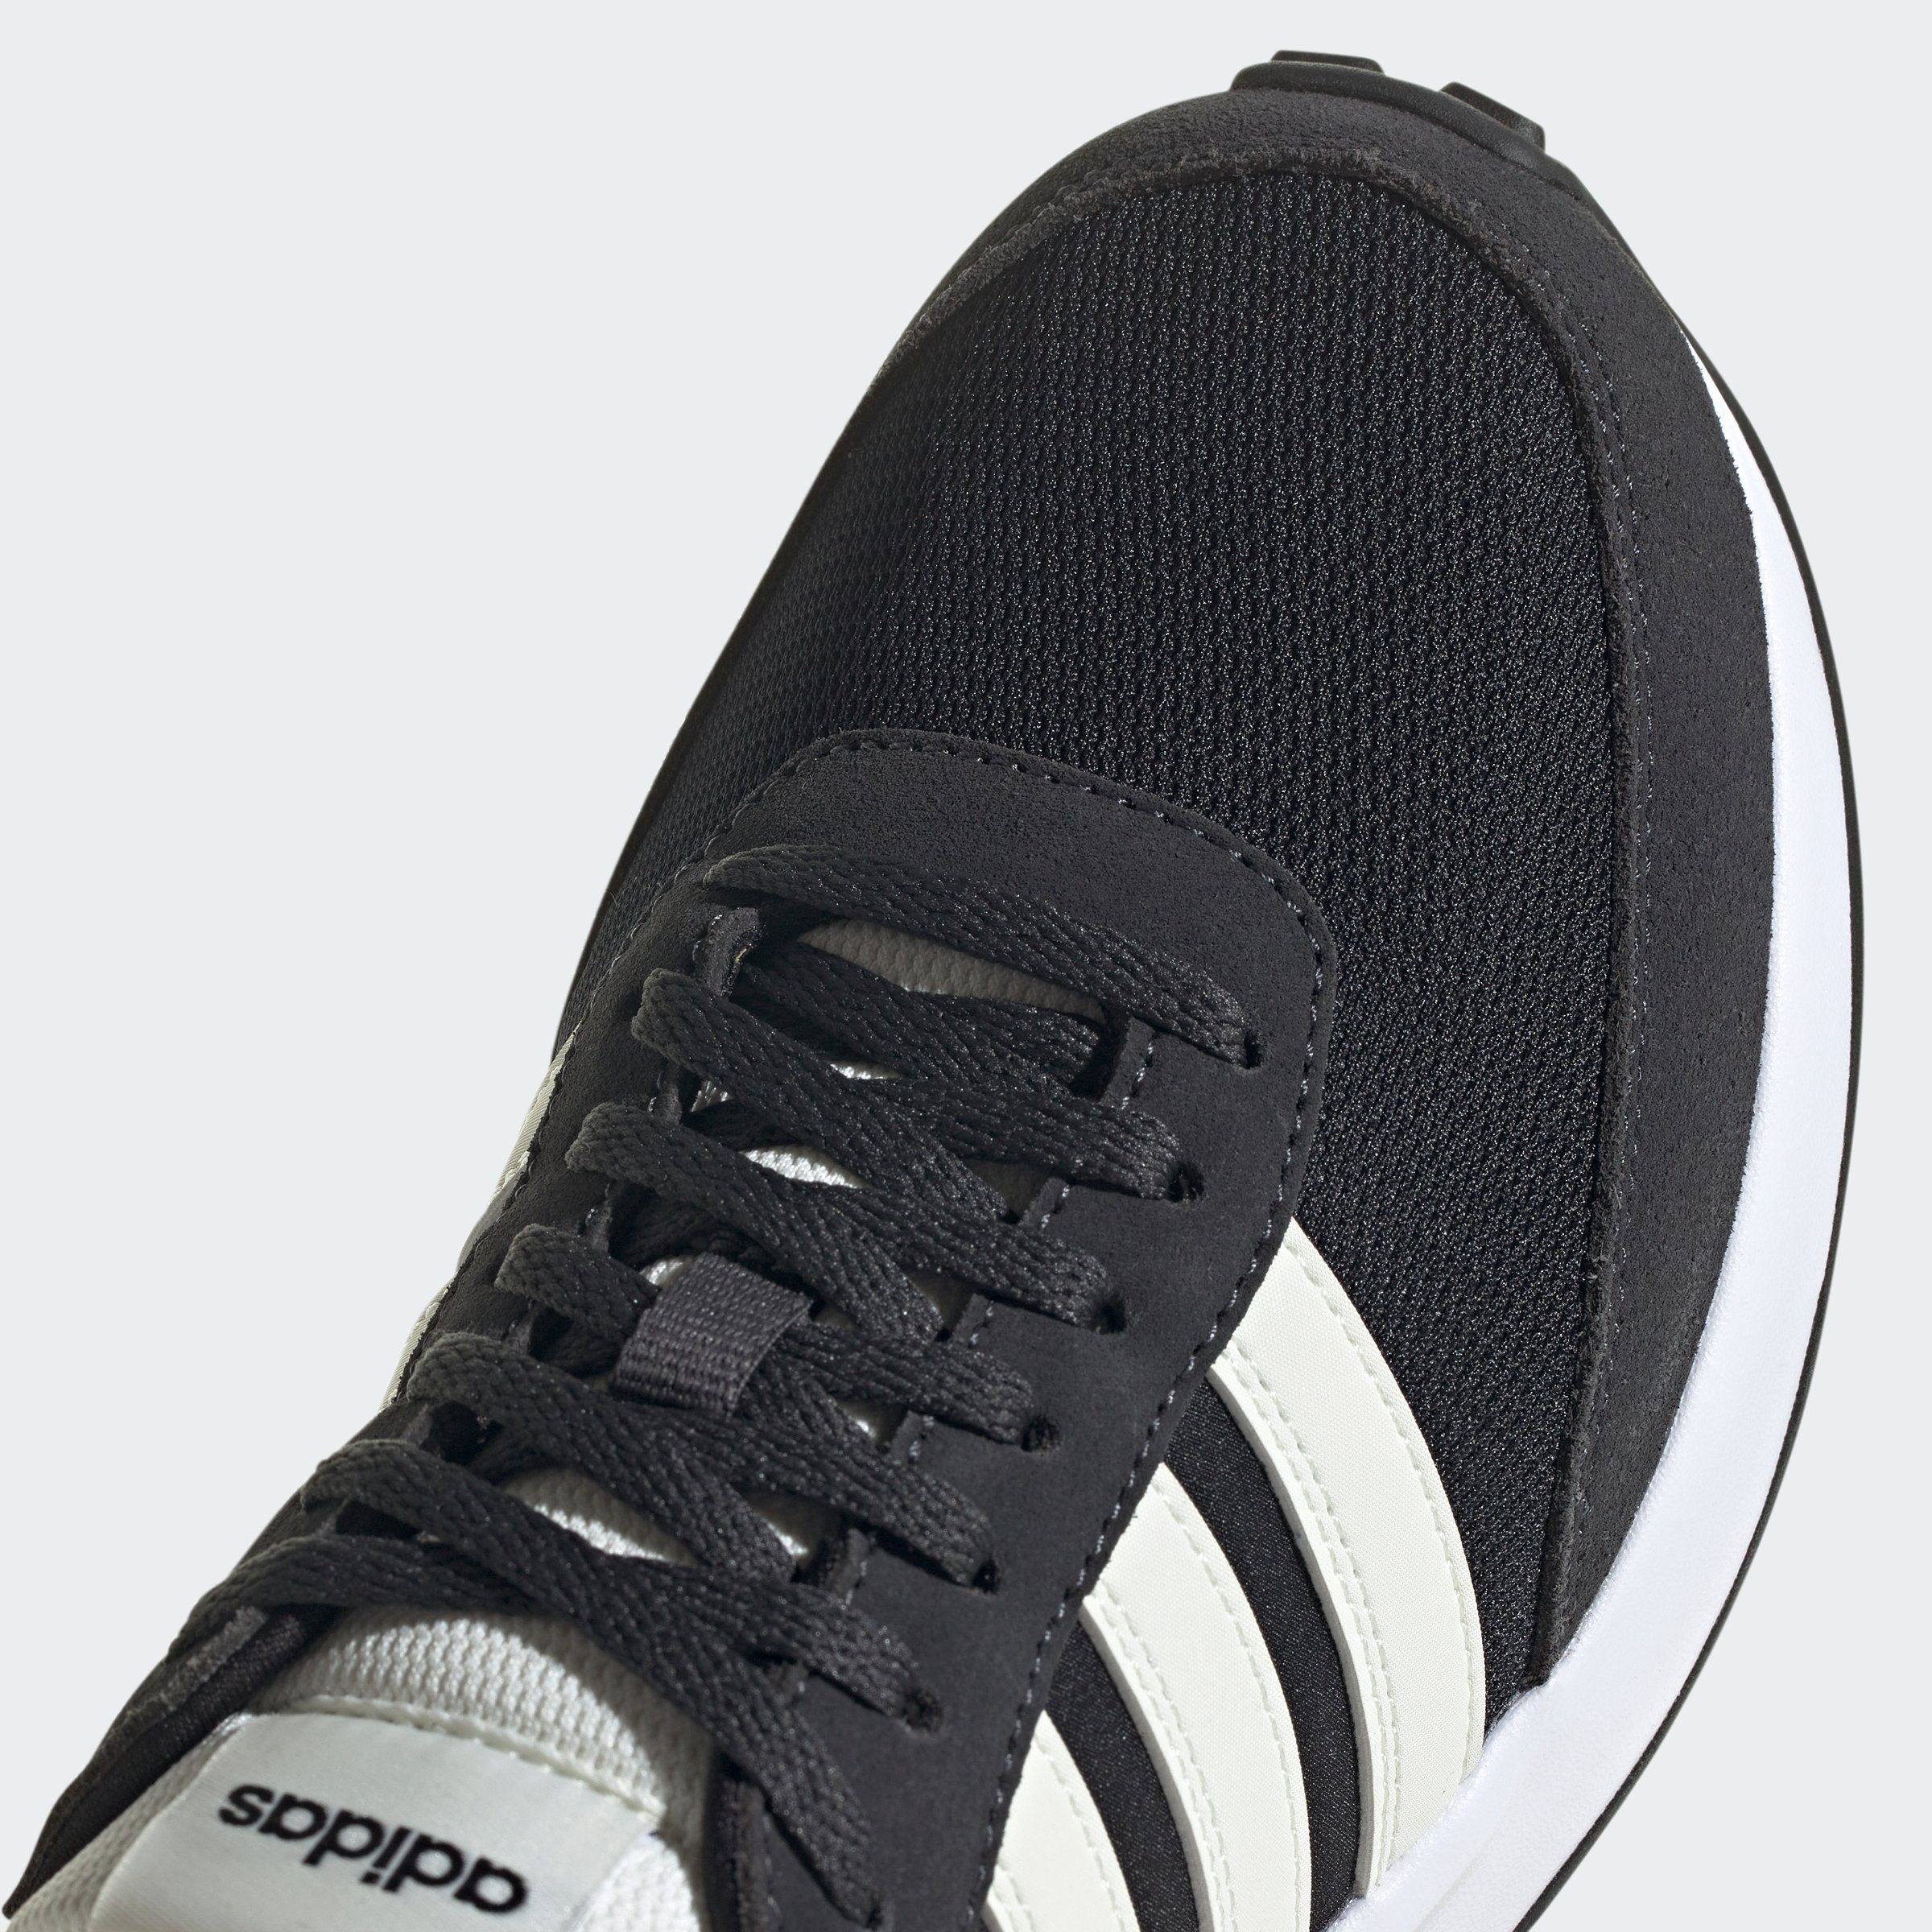 CBLACK/OWHITE/CARBON 70S Sportswear RUN adidas Sneaker